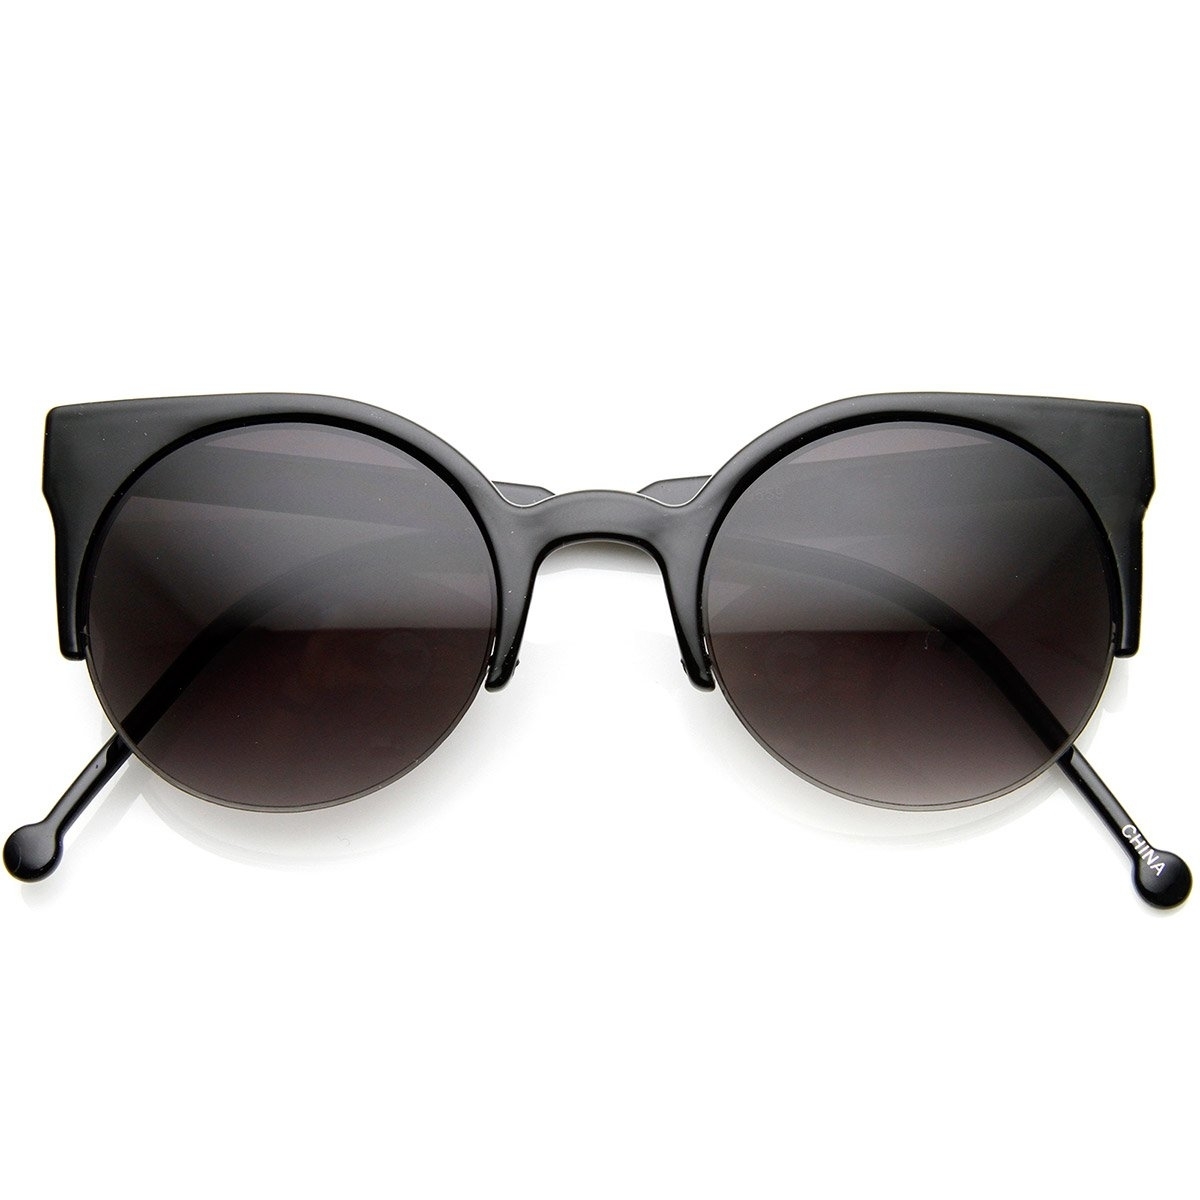 Womens Fashion Half Frame Round Cateye Sunglasses - image 1 of 6